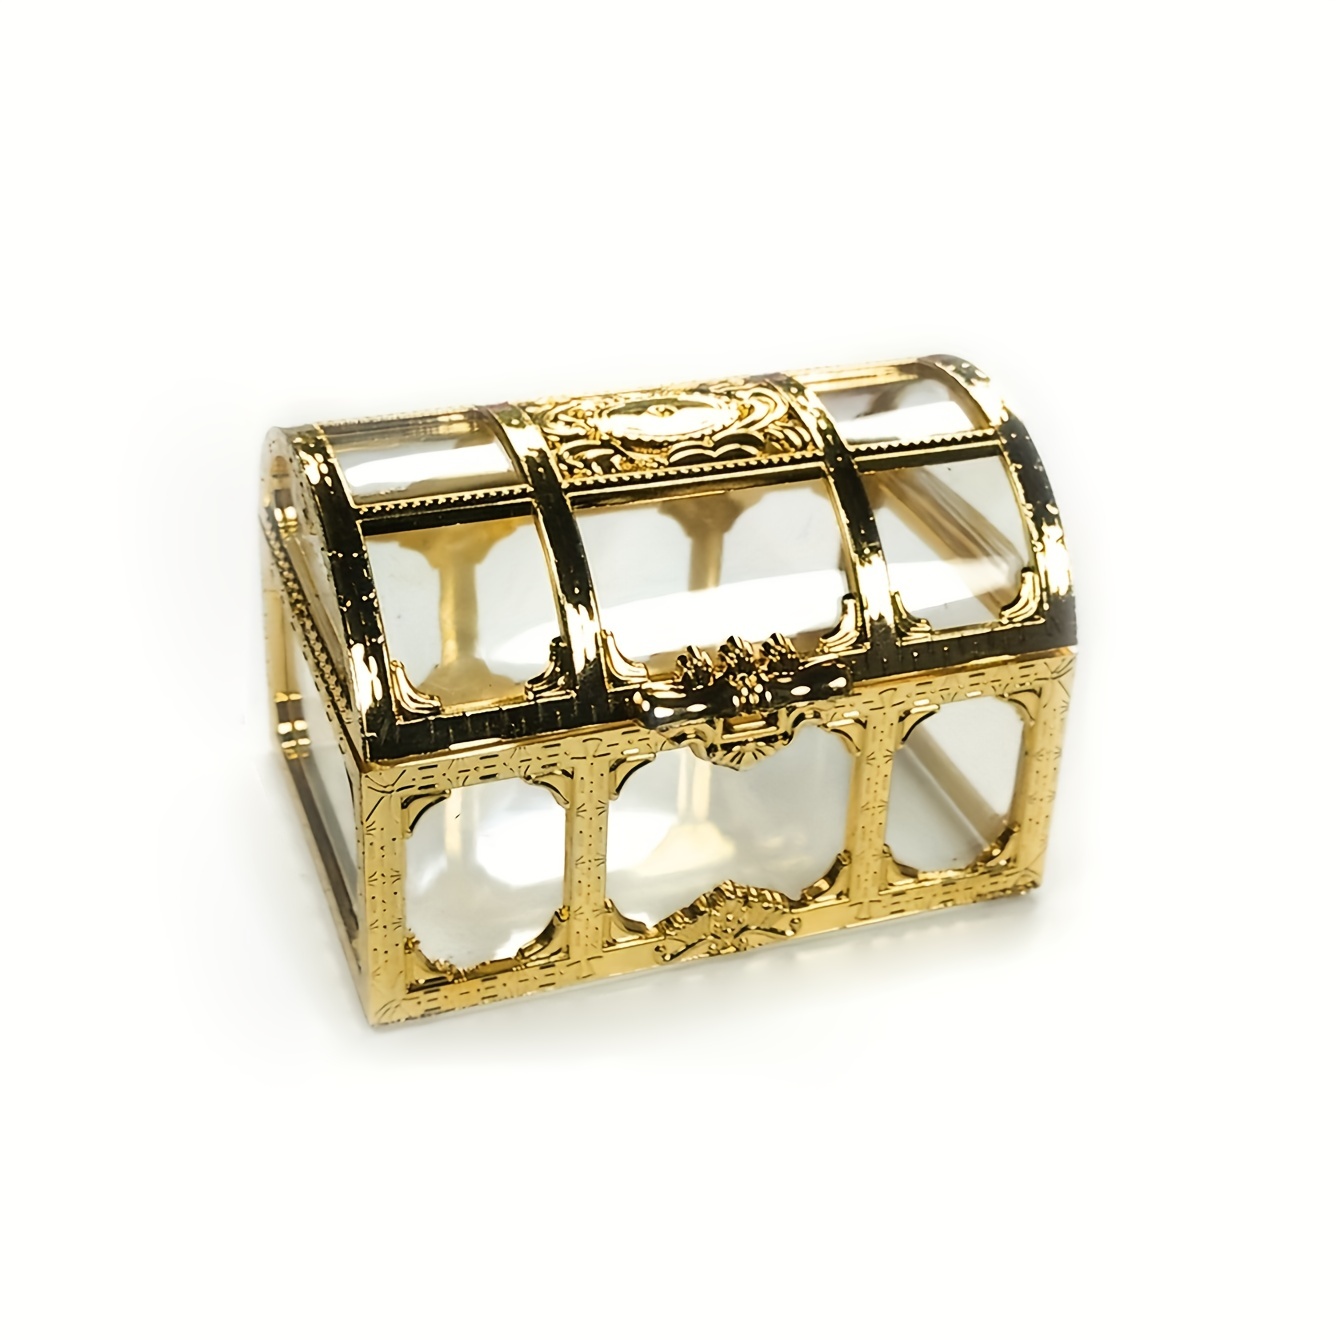 Caja dorada Magia, Golden Box Magic, caja metálica pequeña, small